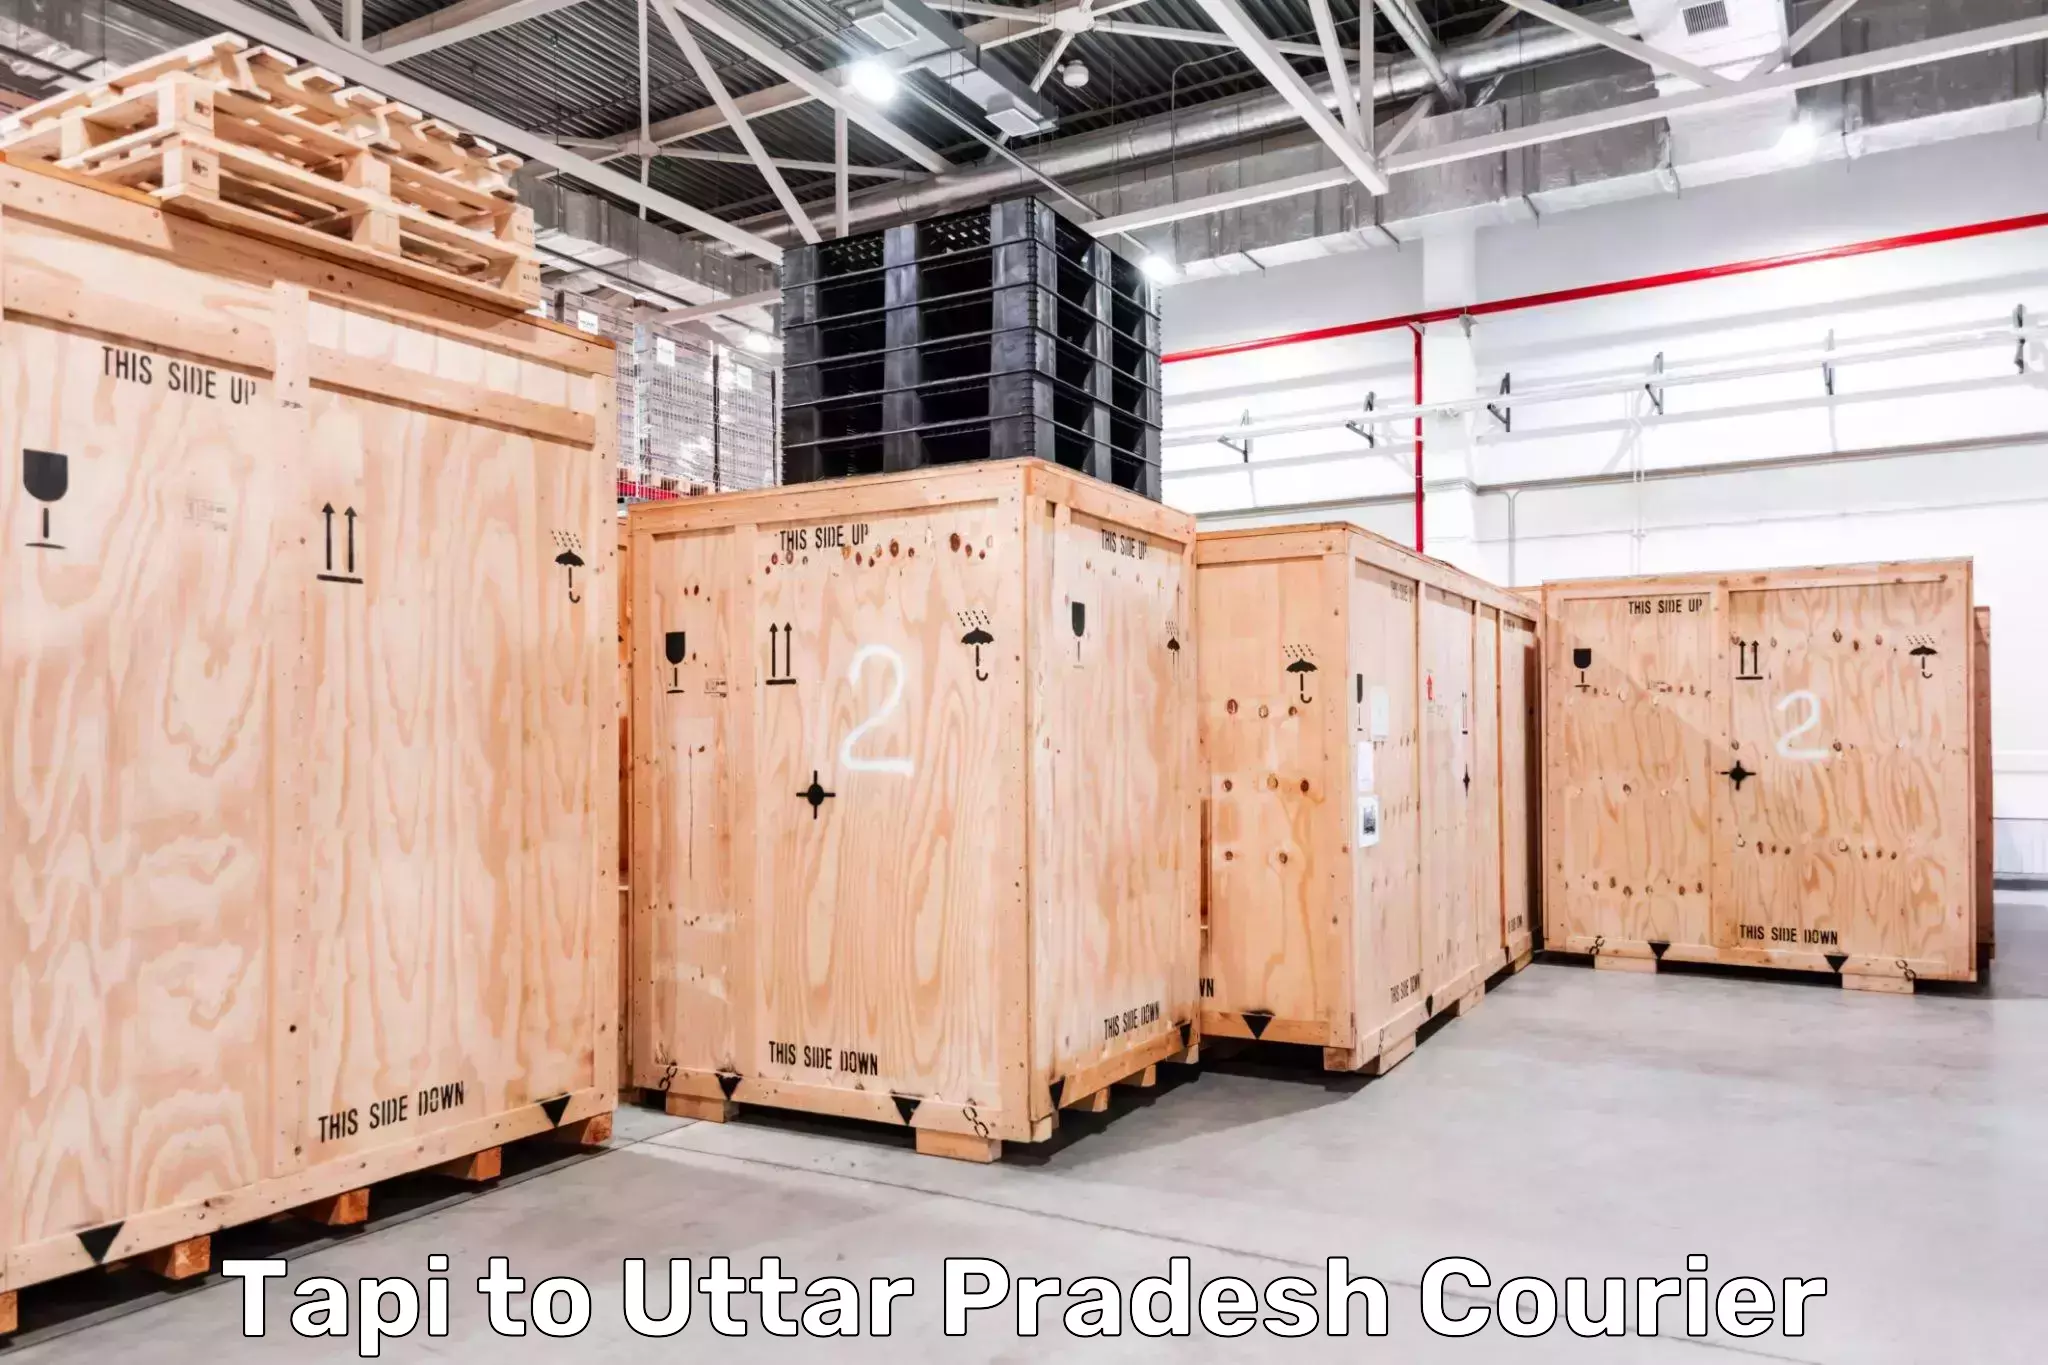 User-friendly delivery service Tapi to Uttar Pradesh